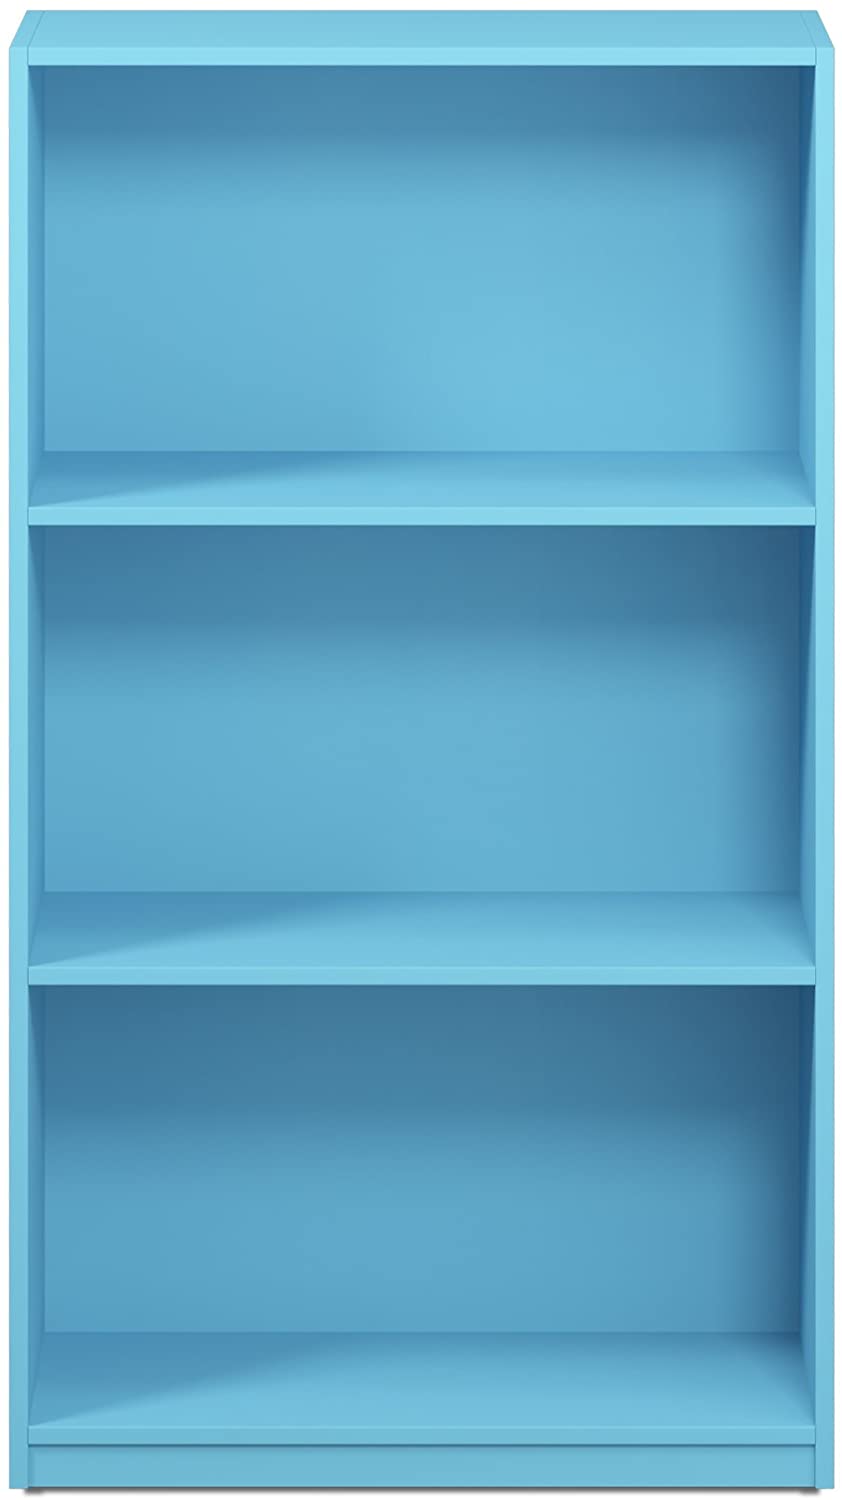 Bookshelf: 3-Tier Bookcase Storage Shelves